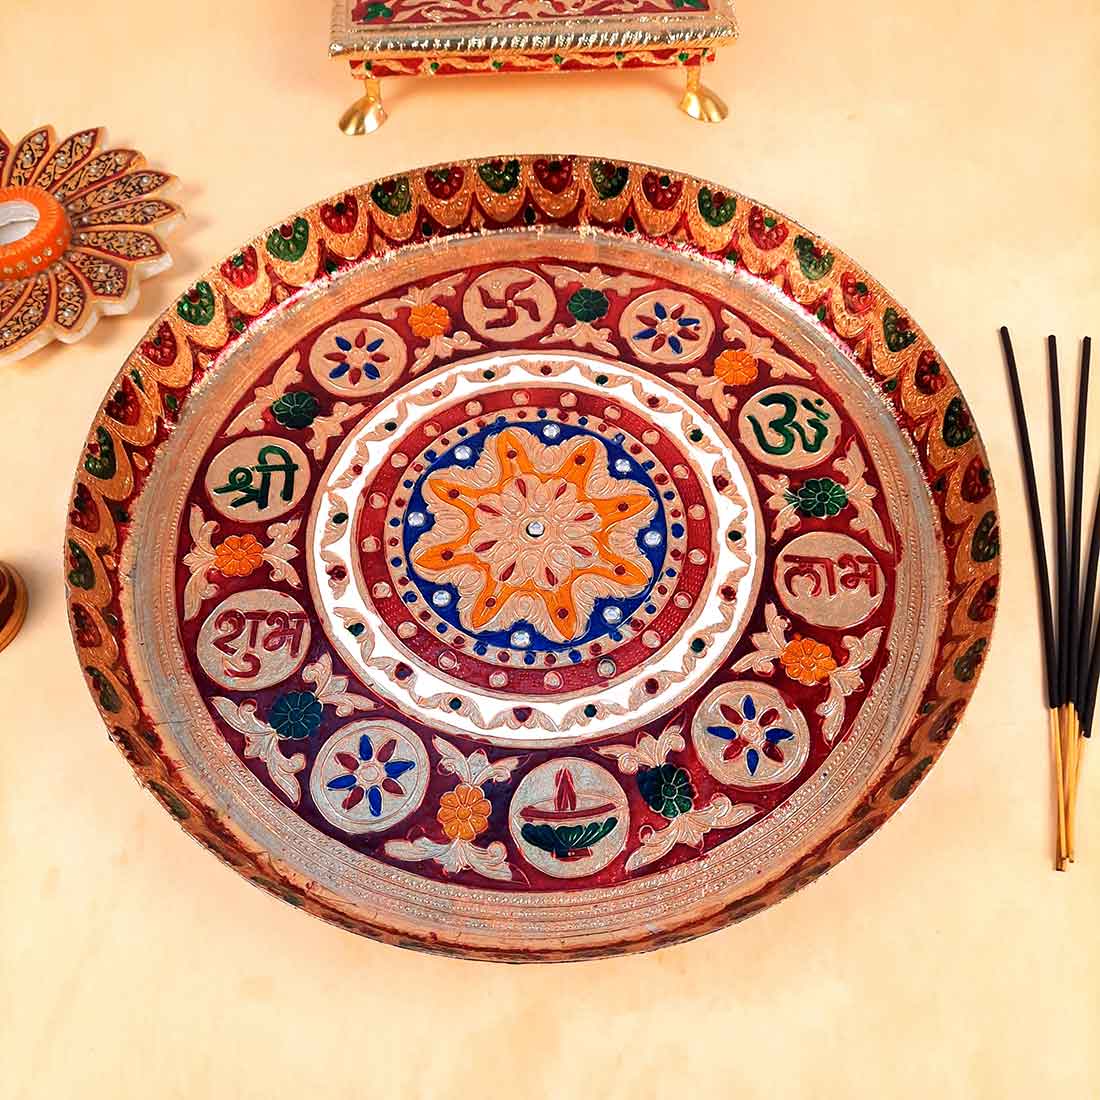 Pooja Thal - Aarti Plate with Meenakari Work & Shubh Labh Design - For Pooja, Weddings & Festivals - 13 Inch - ApkaMart